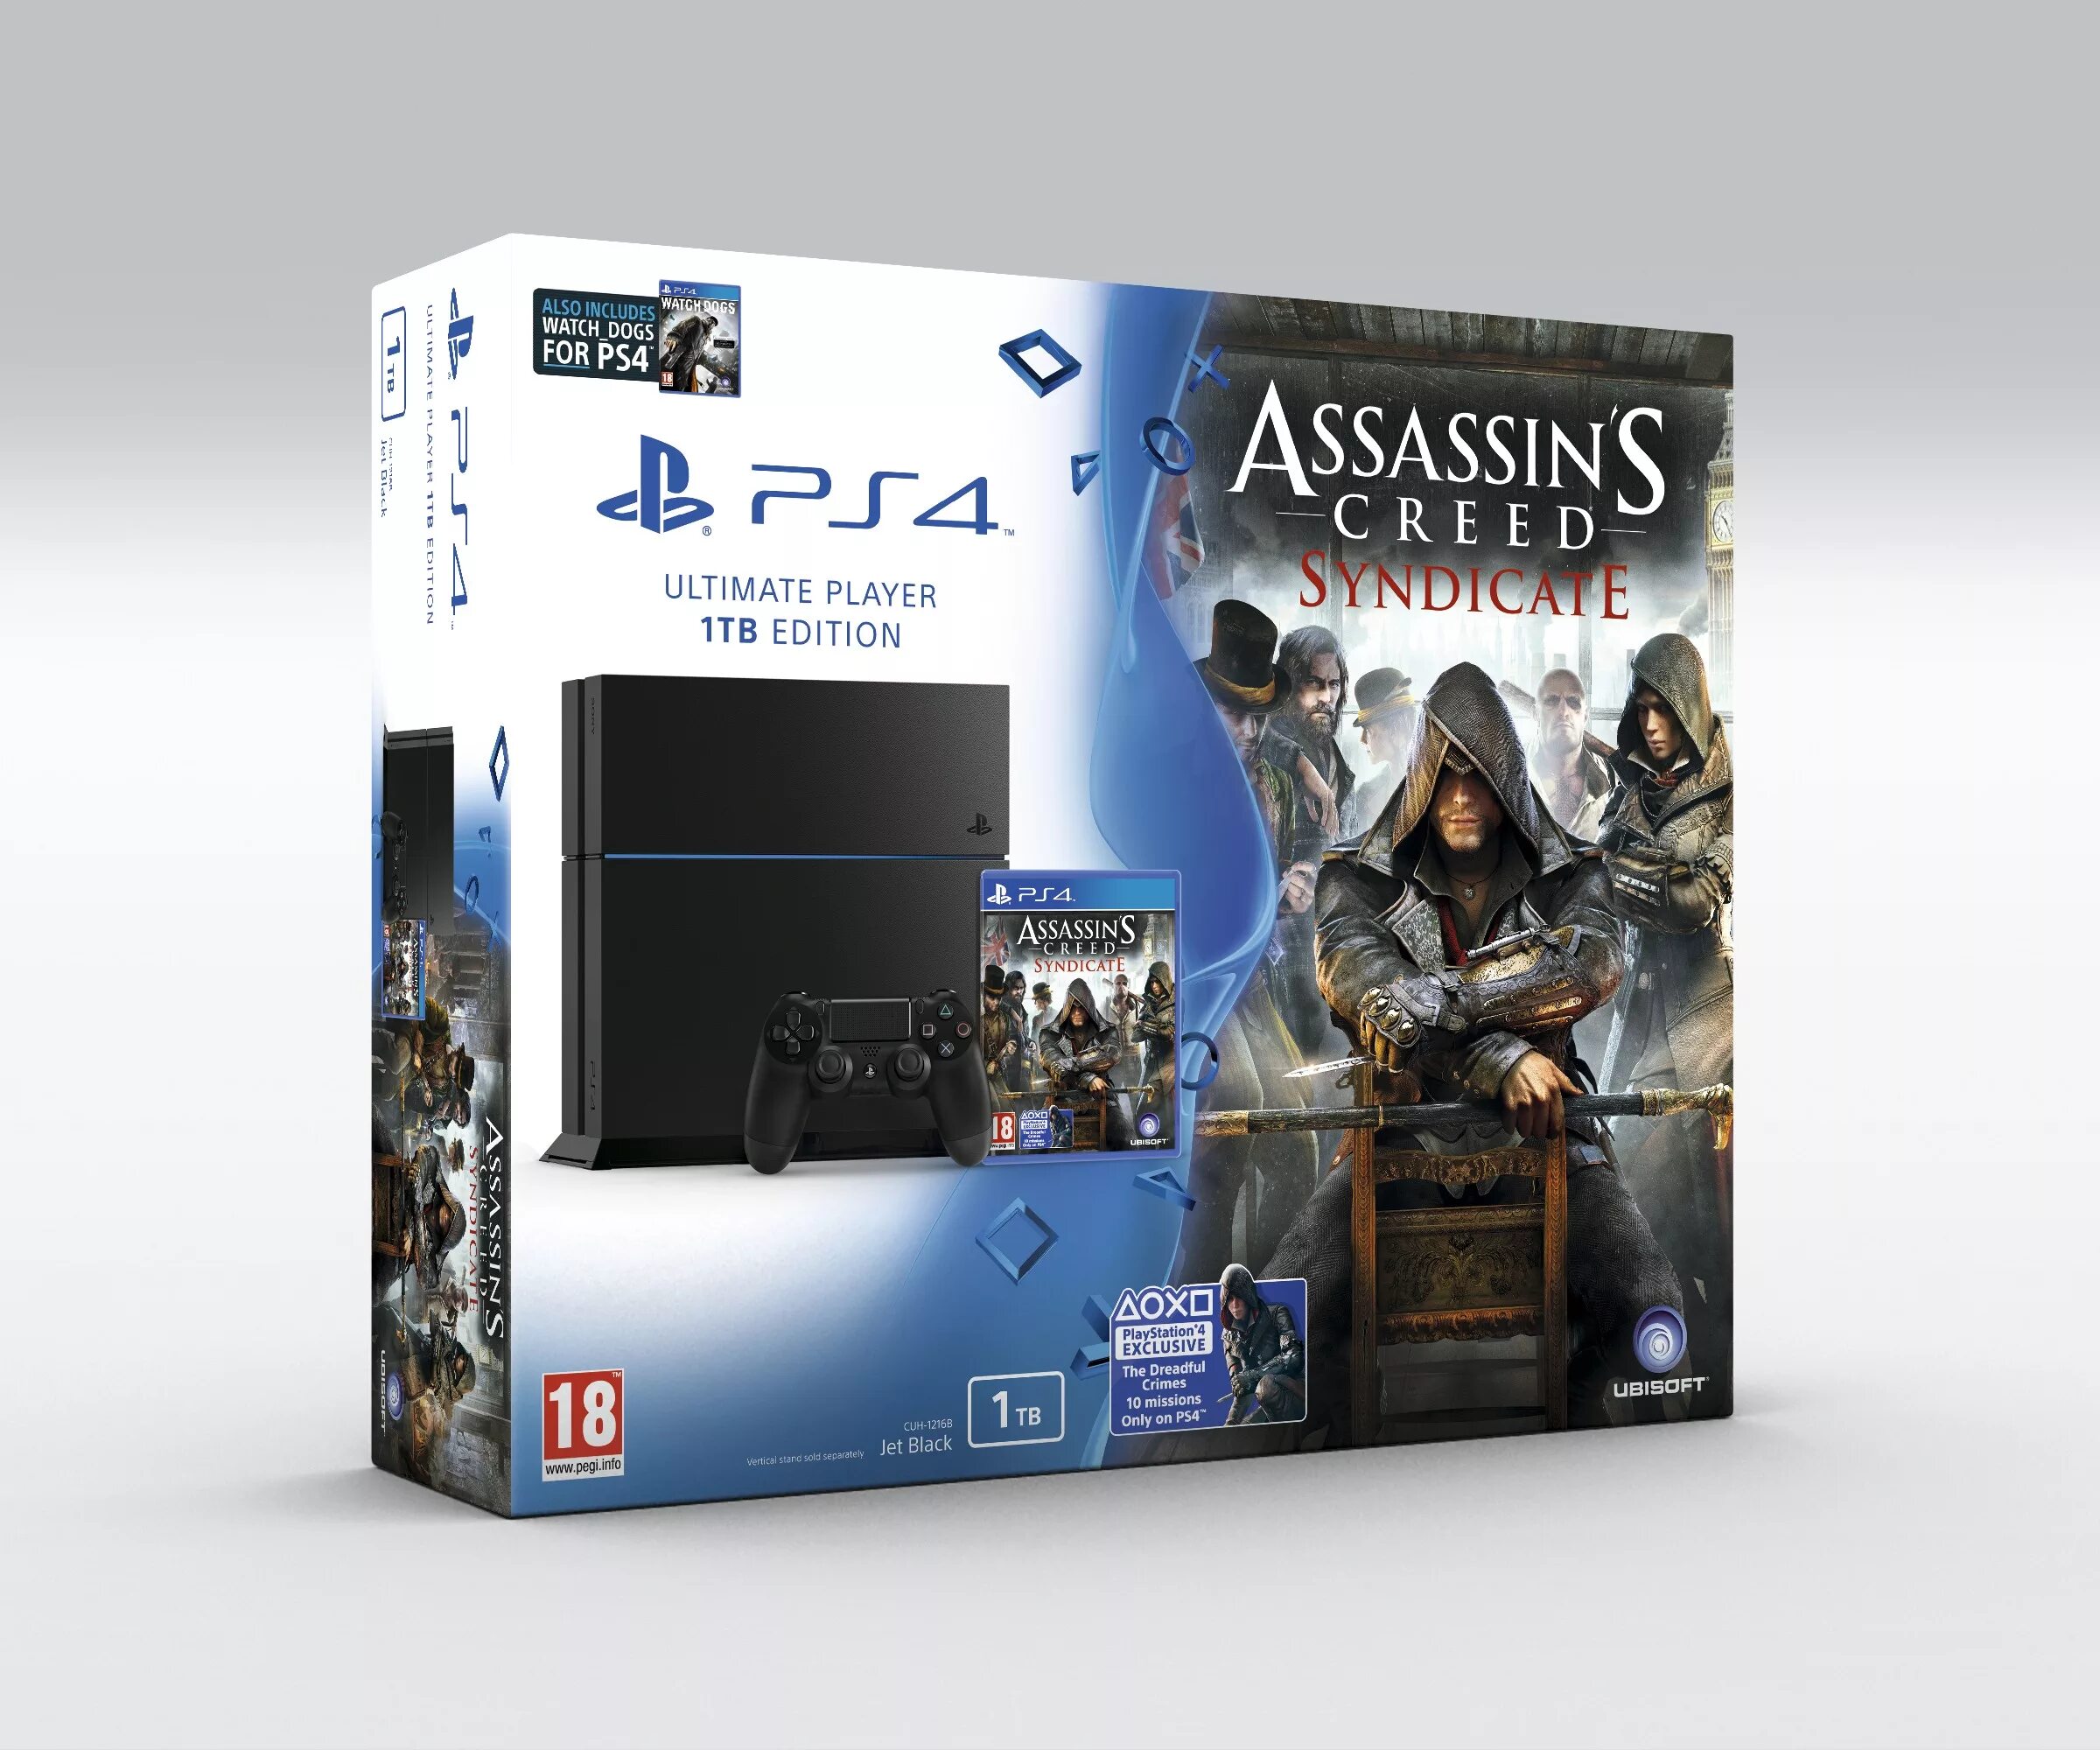 Синдикат Sony PLAYSTATION 1. Плейстейшен 4 диски ассасин Крид. Sony PLAYSTATION 4 бандл. Assassin's Creed Синдикат ps4. Playstation bundle